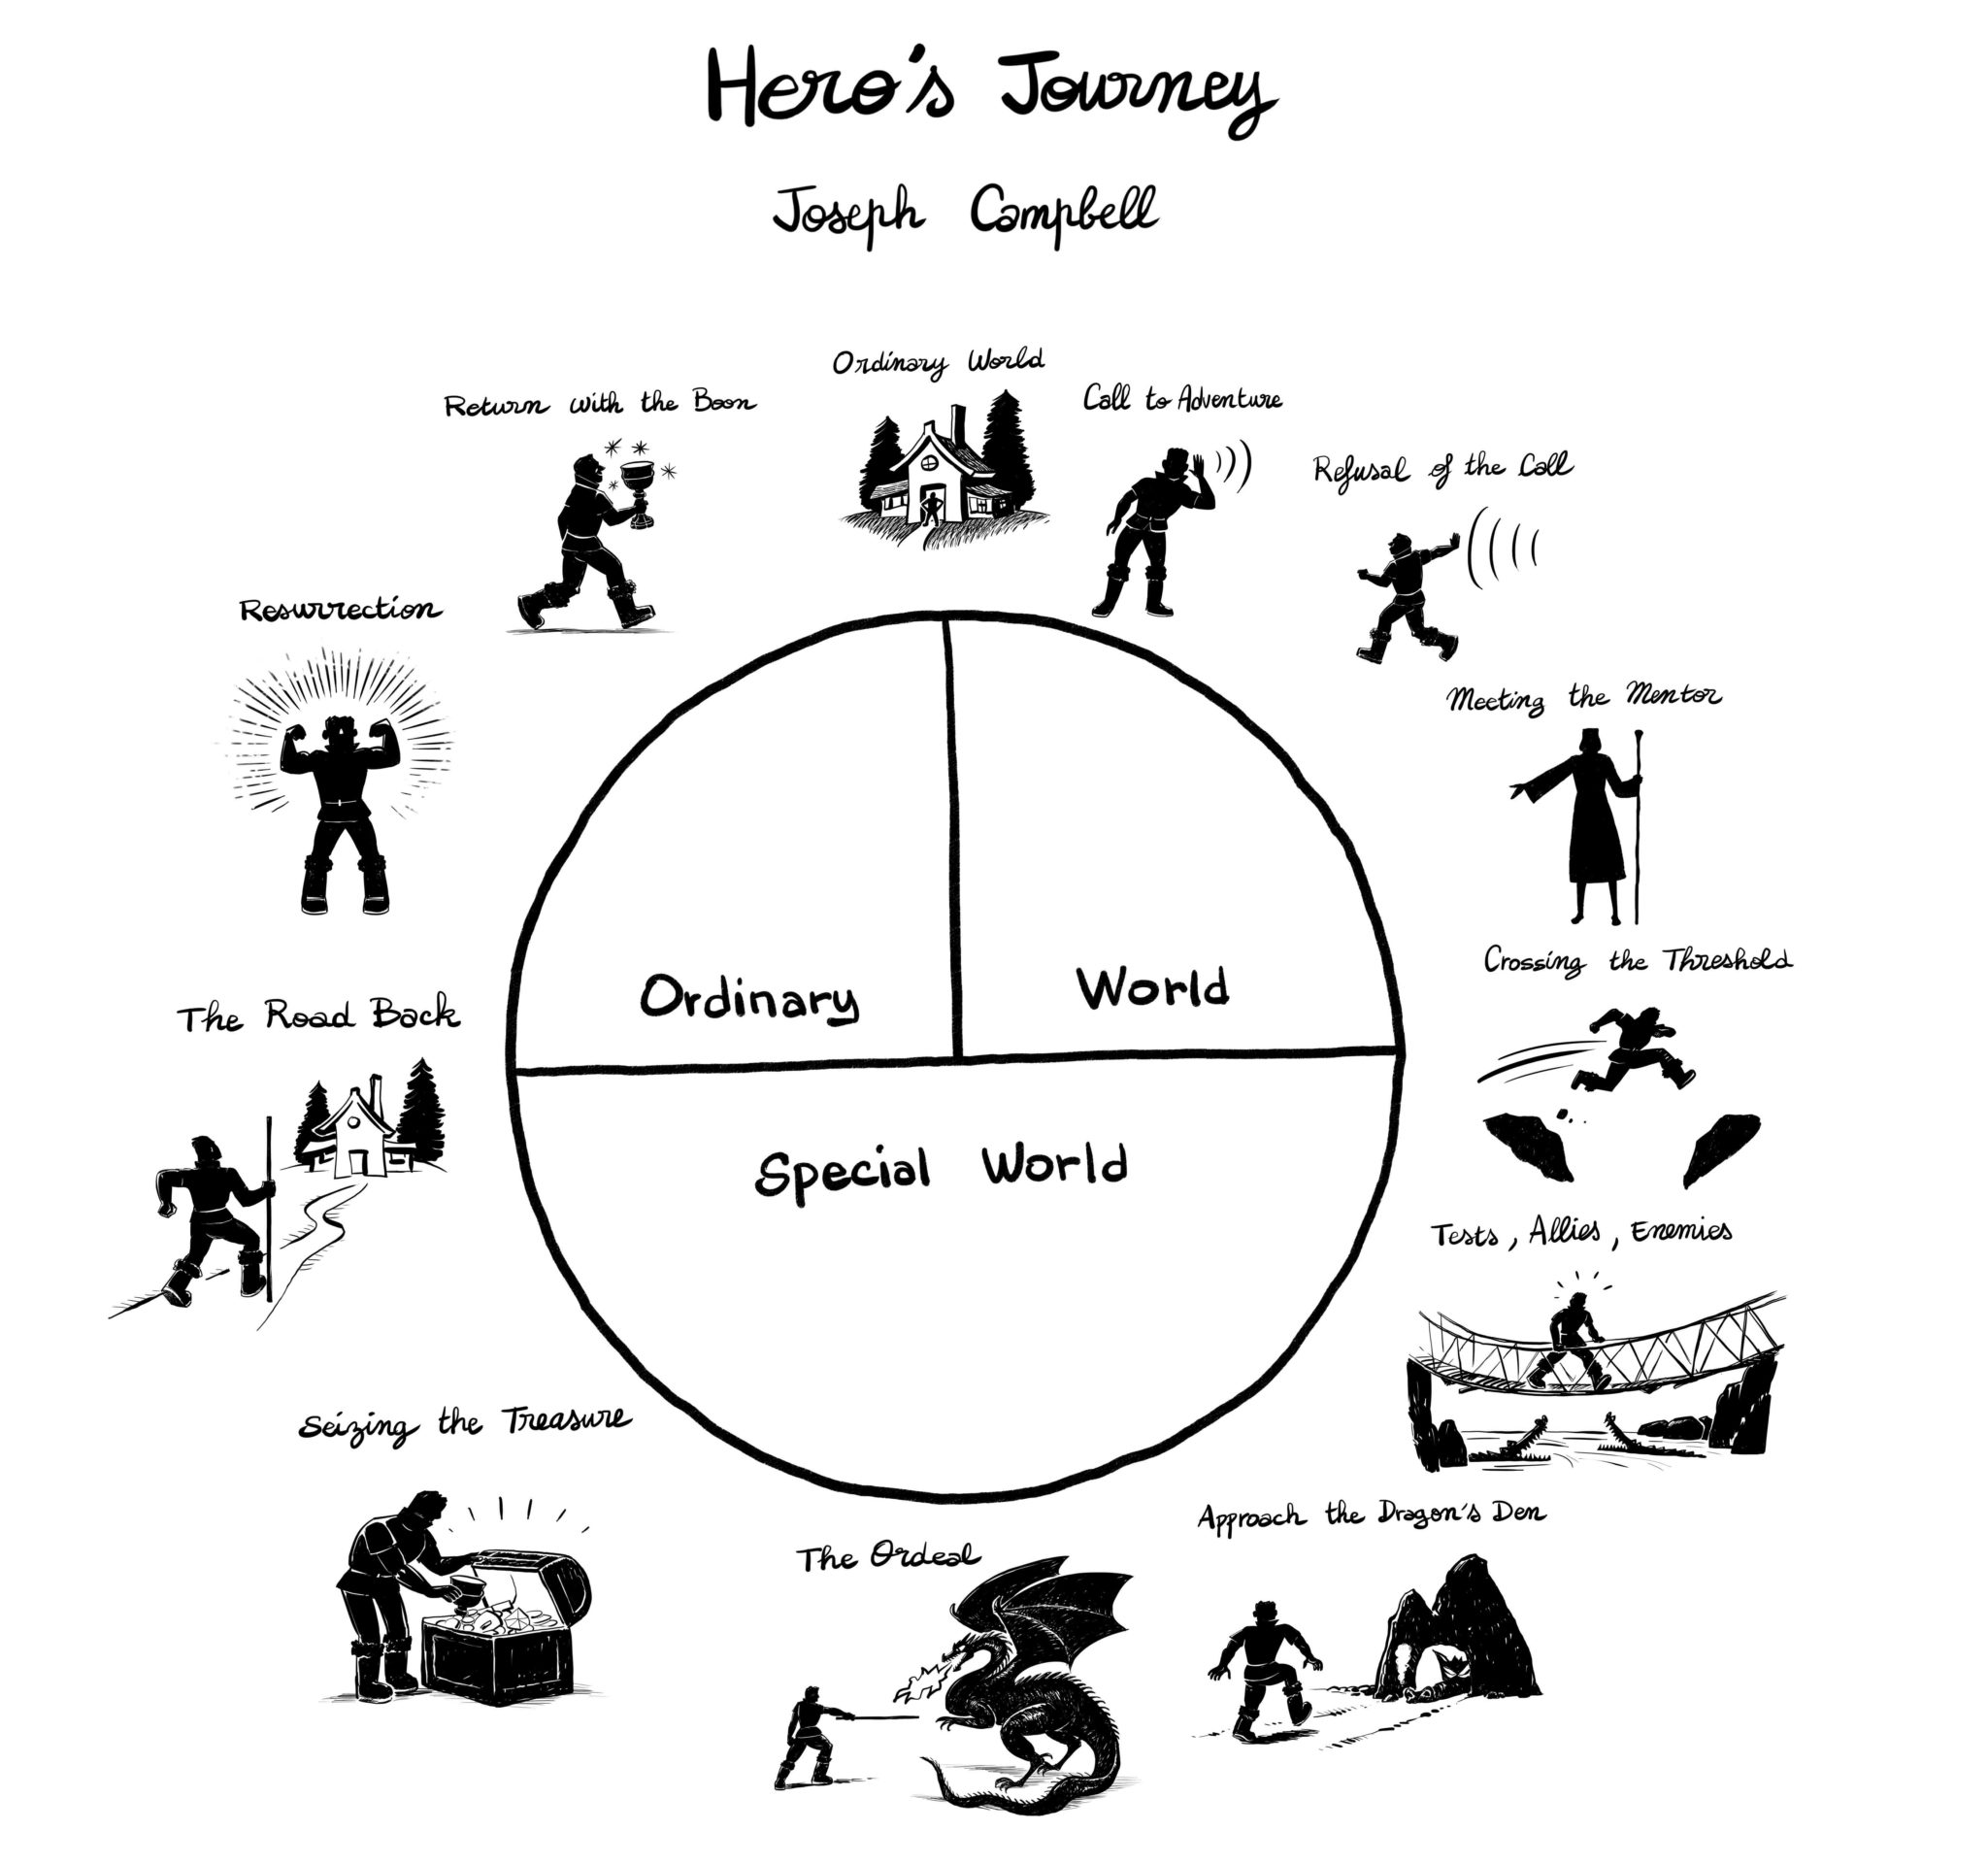 hero's journey story pdf